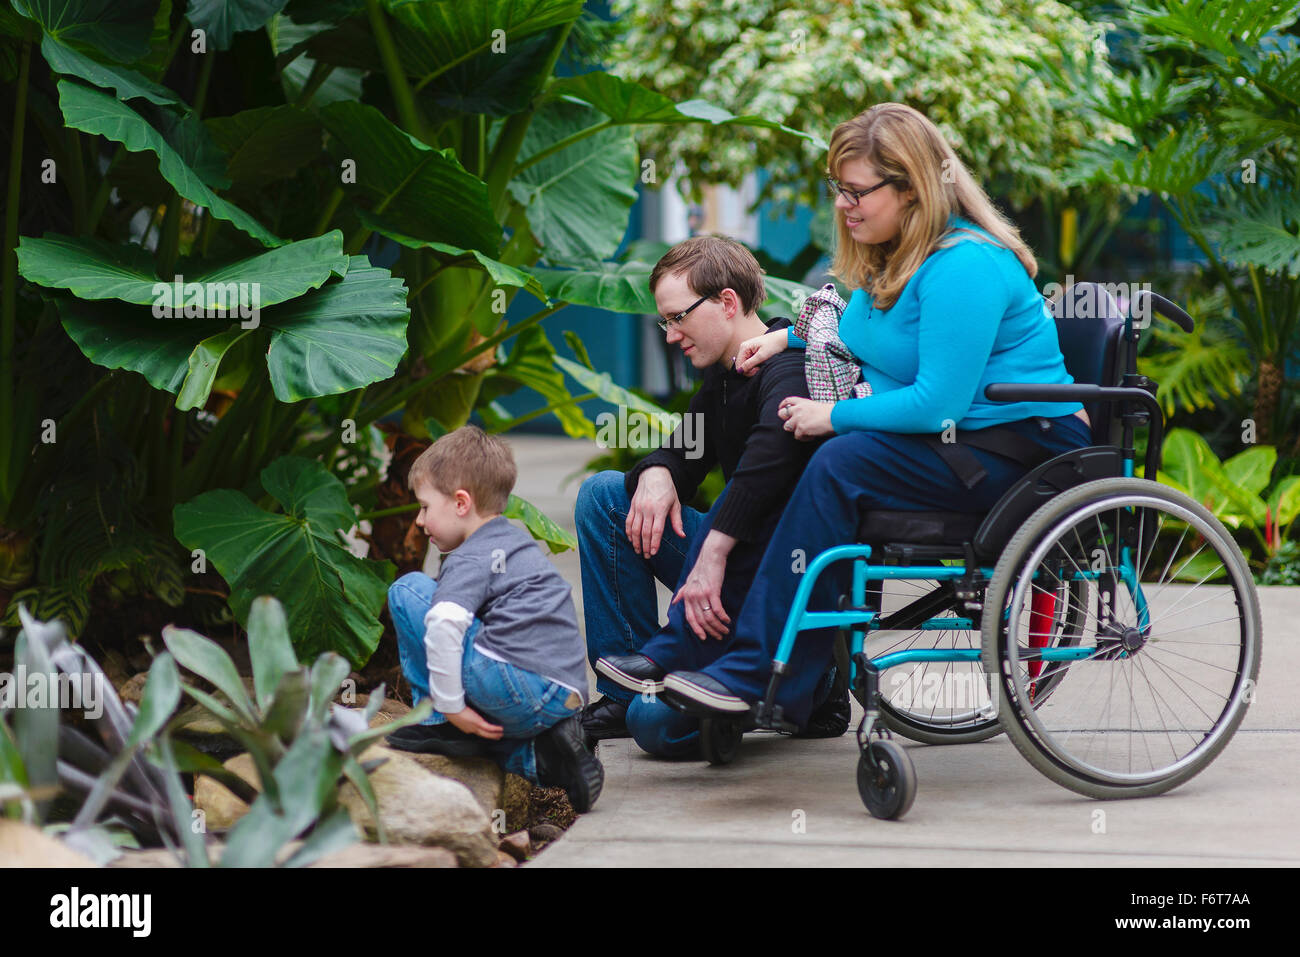 Paraplegic woman and family admiring plants Stock Photo